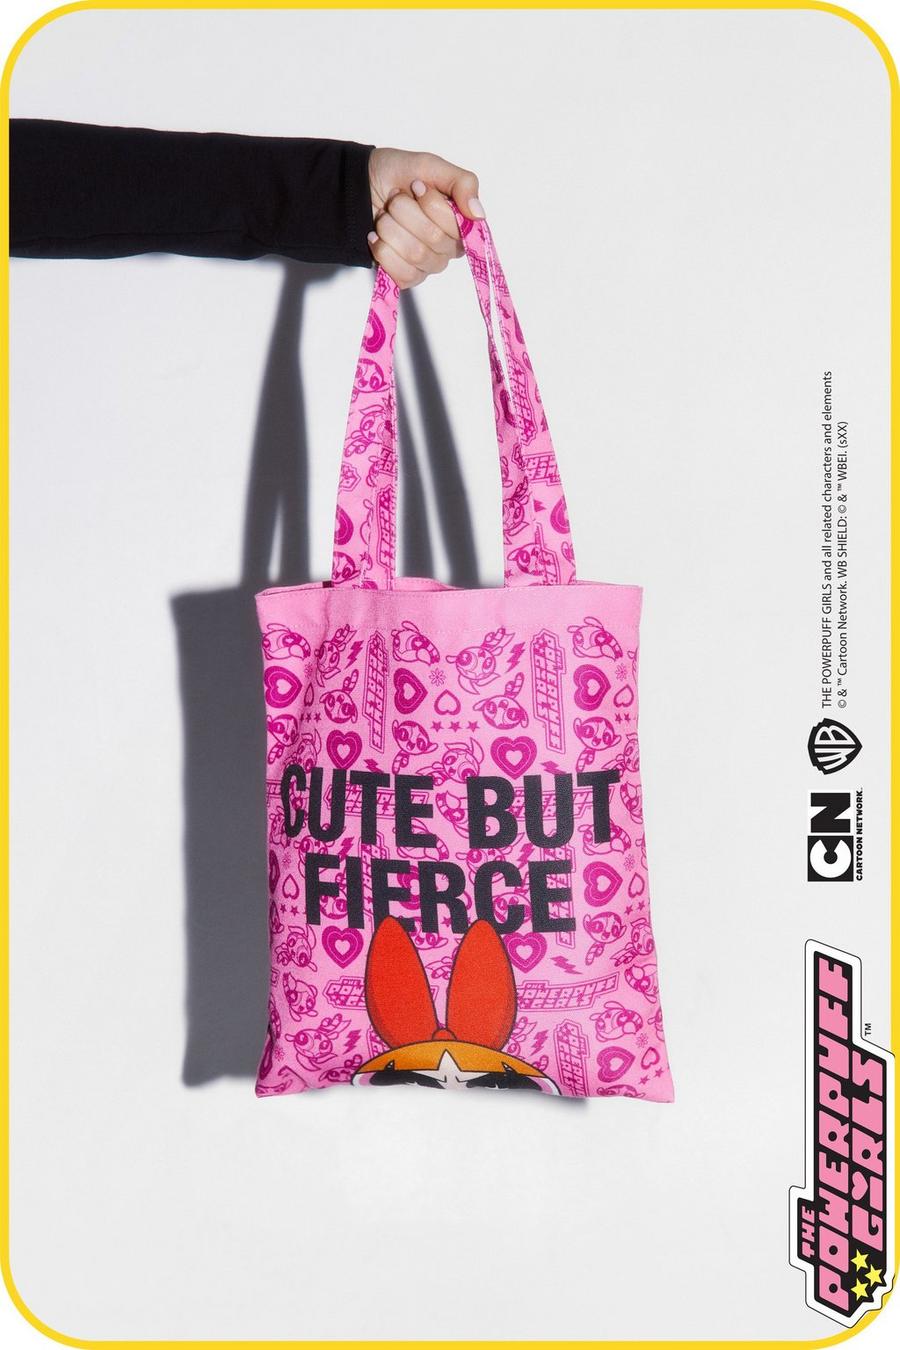 Cute But Fierce' The Powerpuff Girls Tote Bag